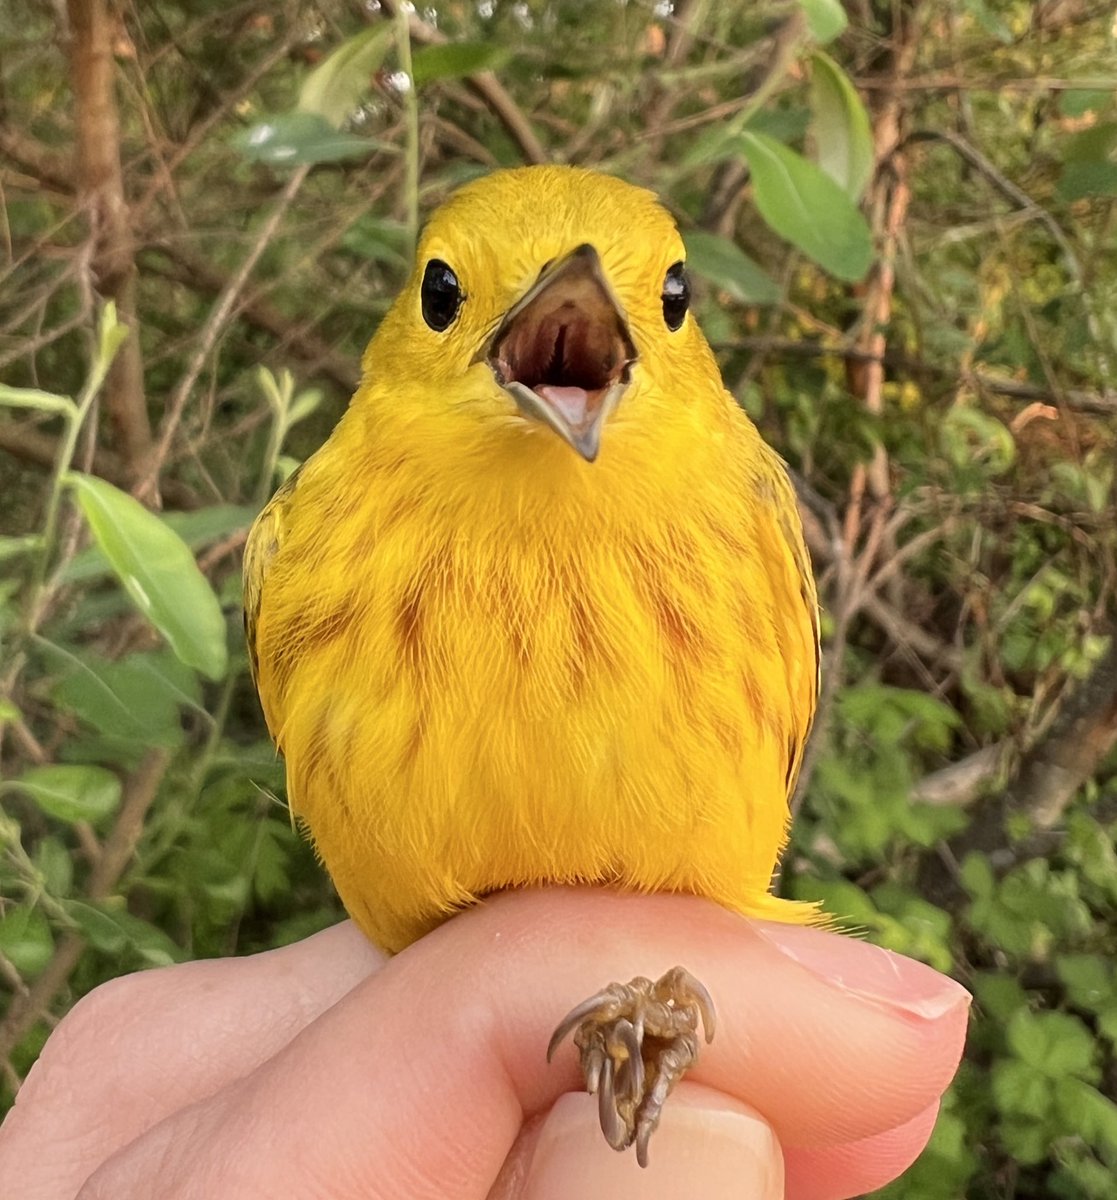 Yellow Warbler ☀️💛
#birds
#springmigration
#SpringIsHere